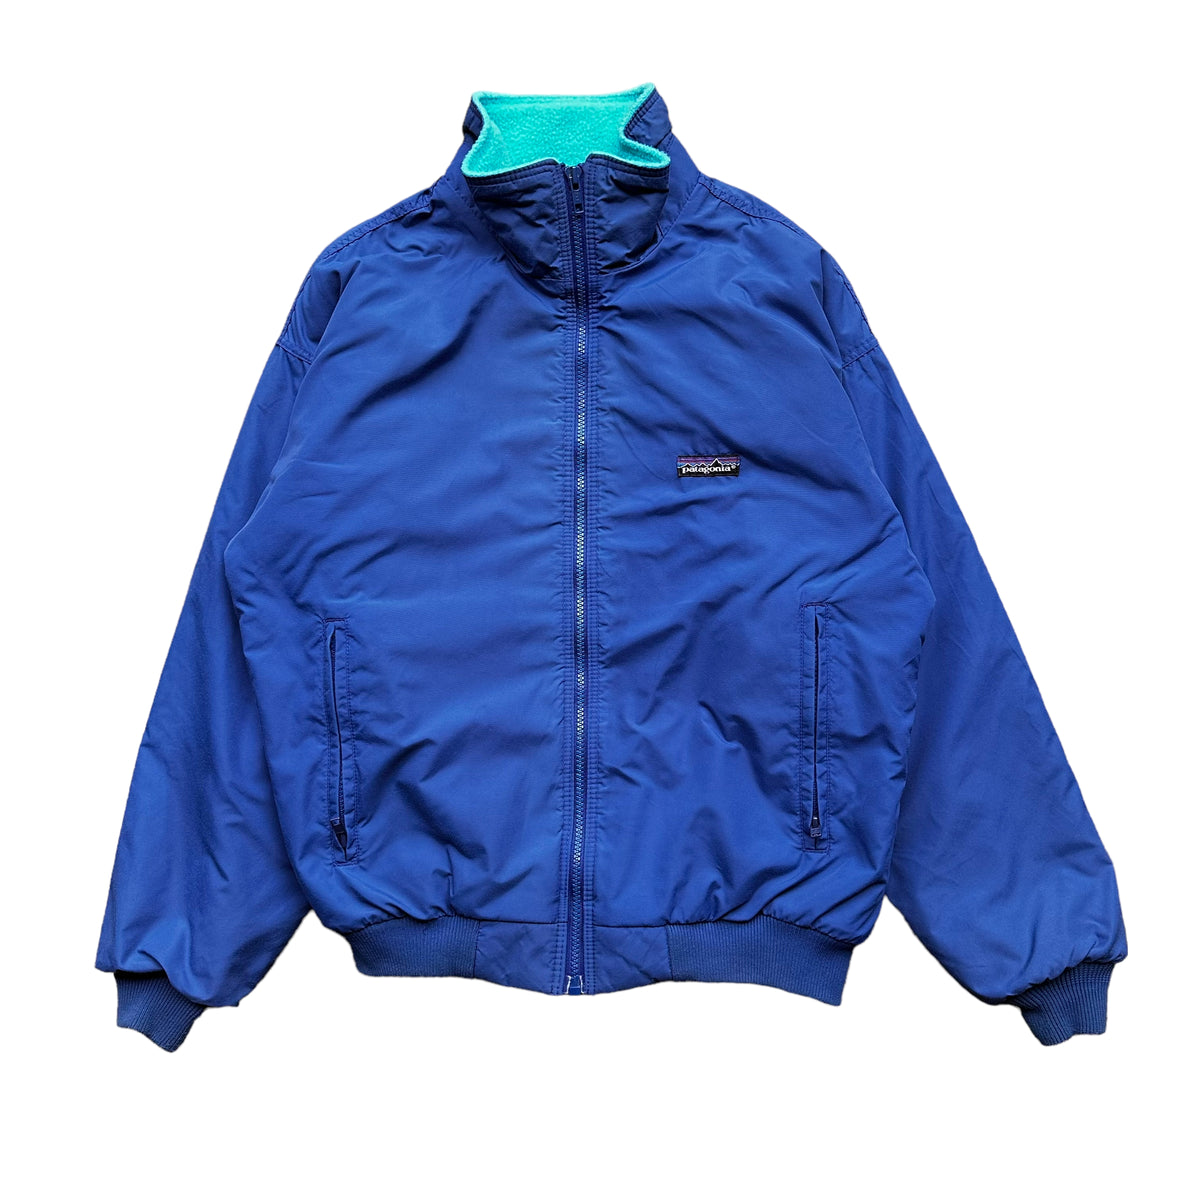 1988 Patagonia jacket small sz10 – Vintage Sponsor